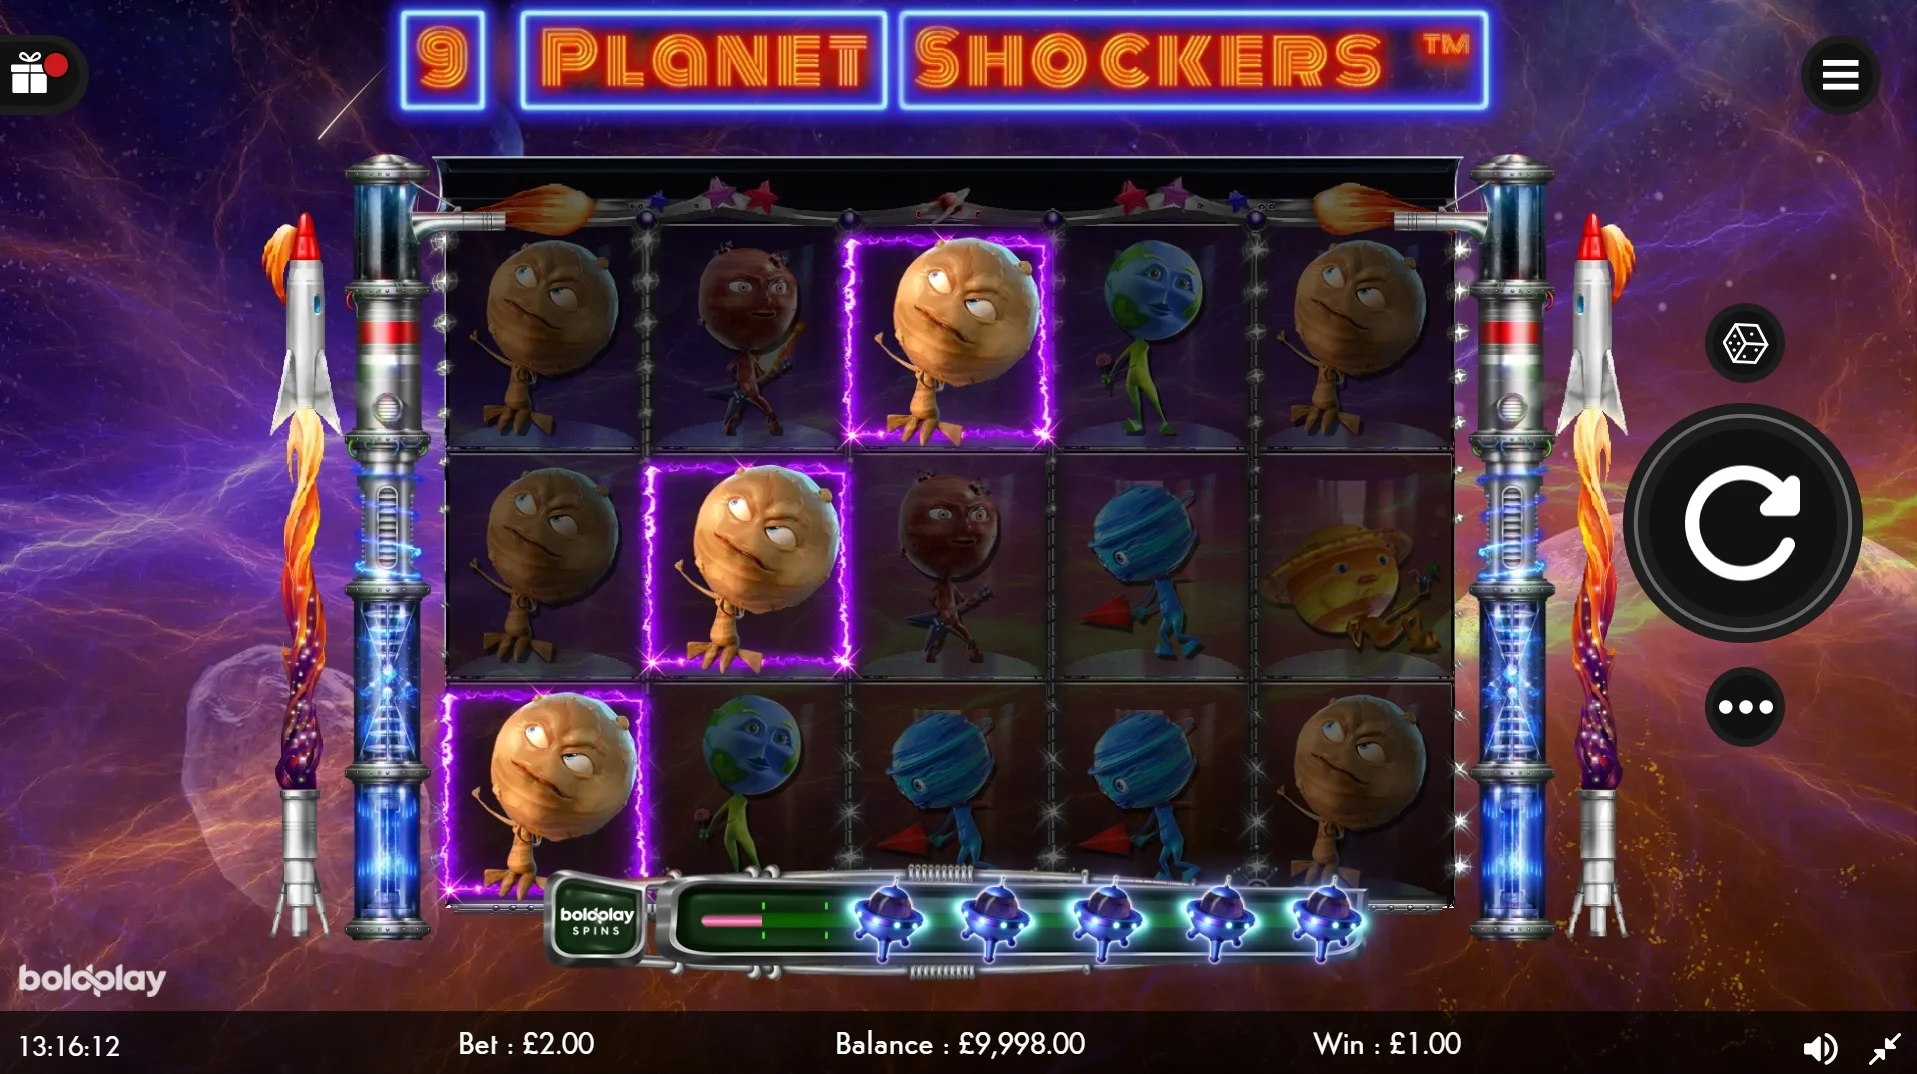 Slot 9 Planet Shocker umumiy ko'rinishi